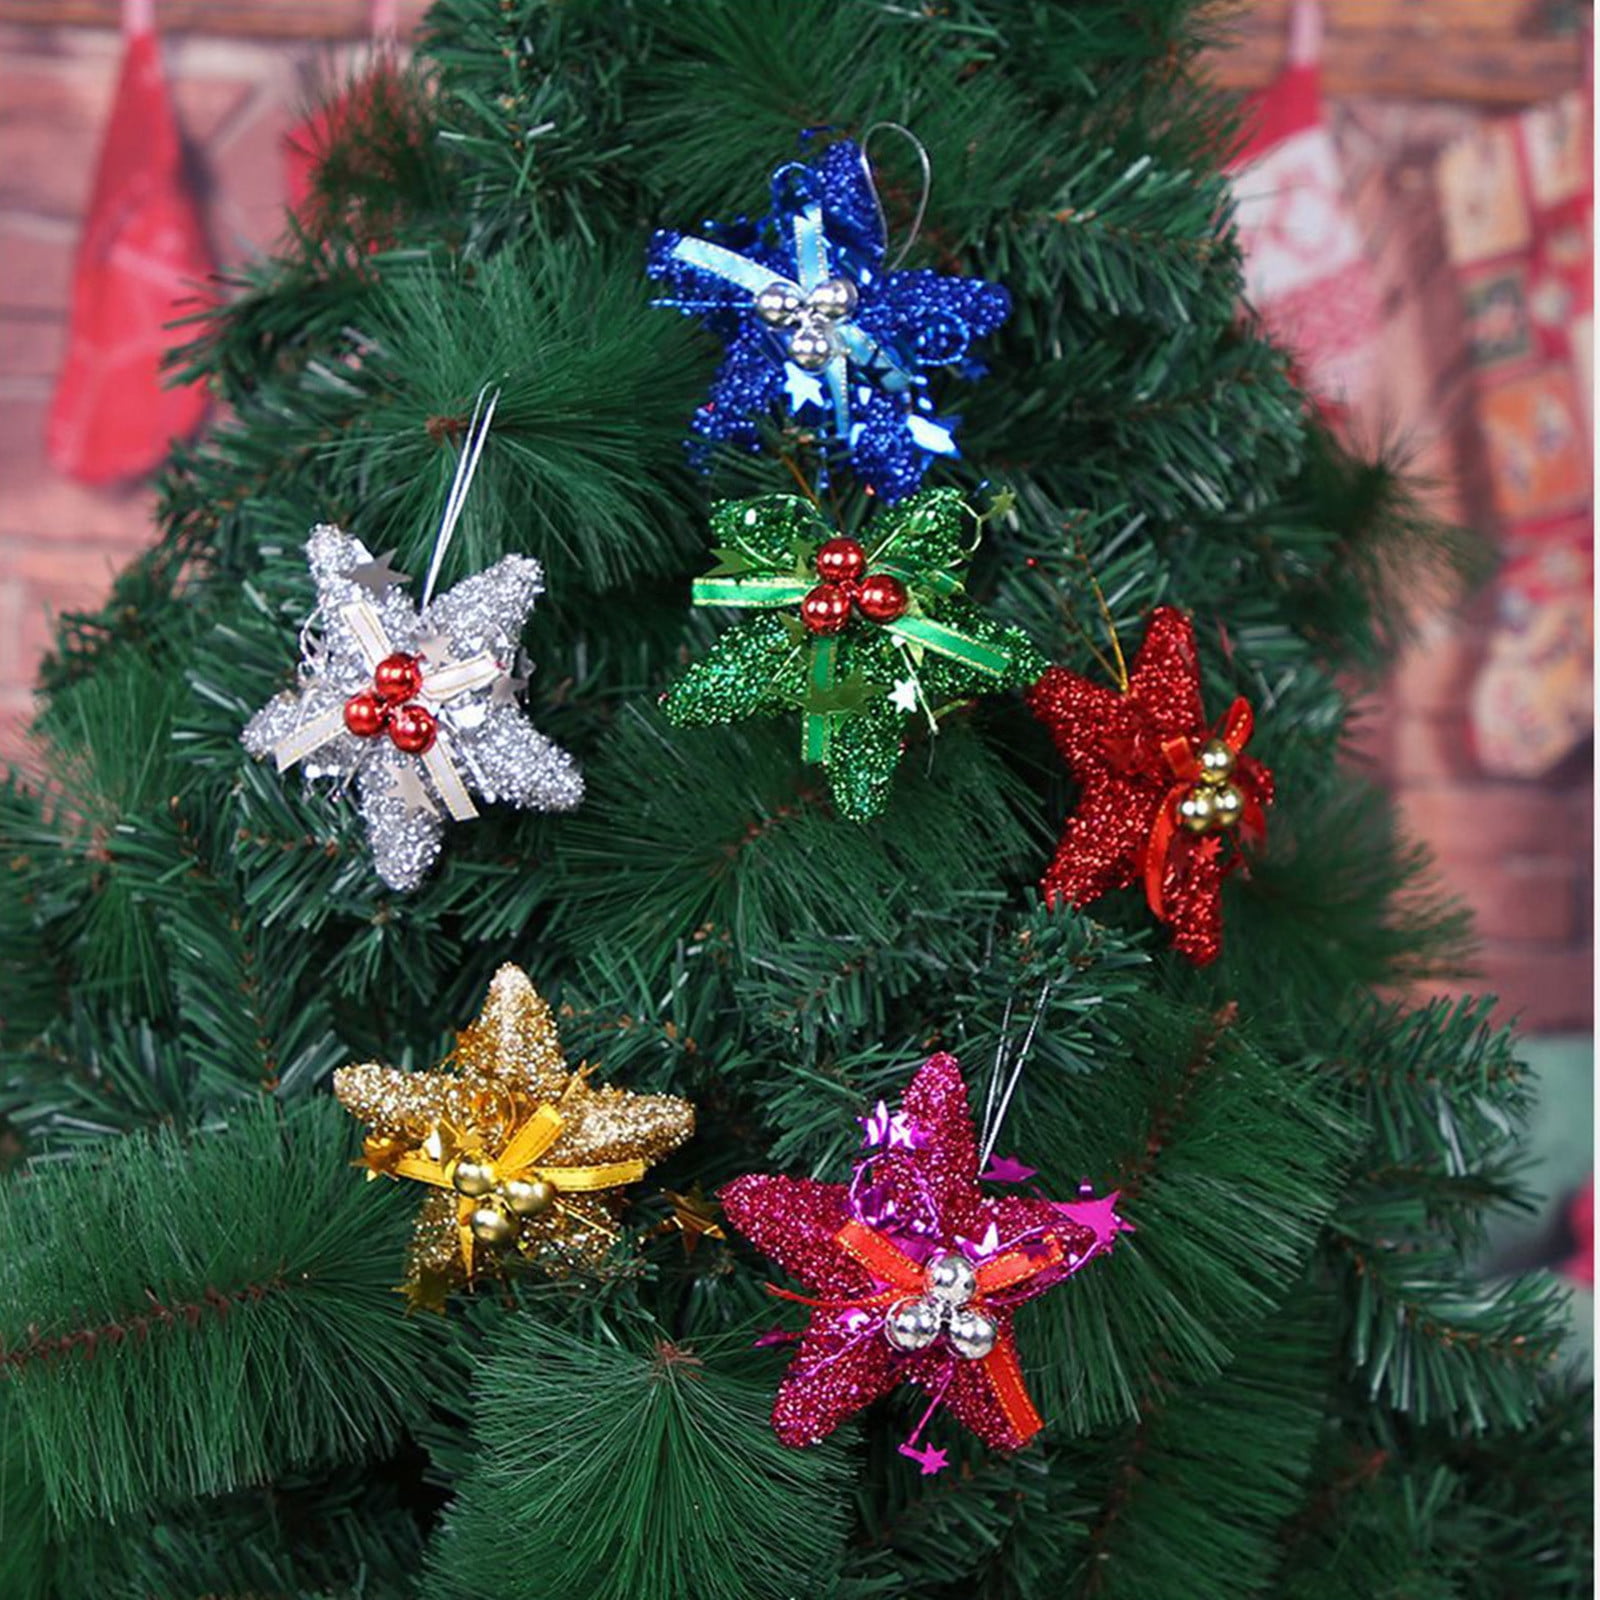 JOY Black White Buffalo Plaid Hanging Ornament S/3 Holiday Christmas Decor 8.75"